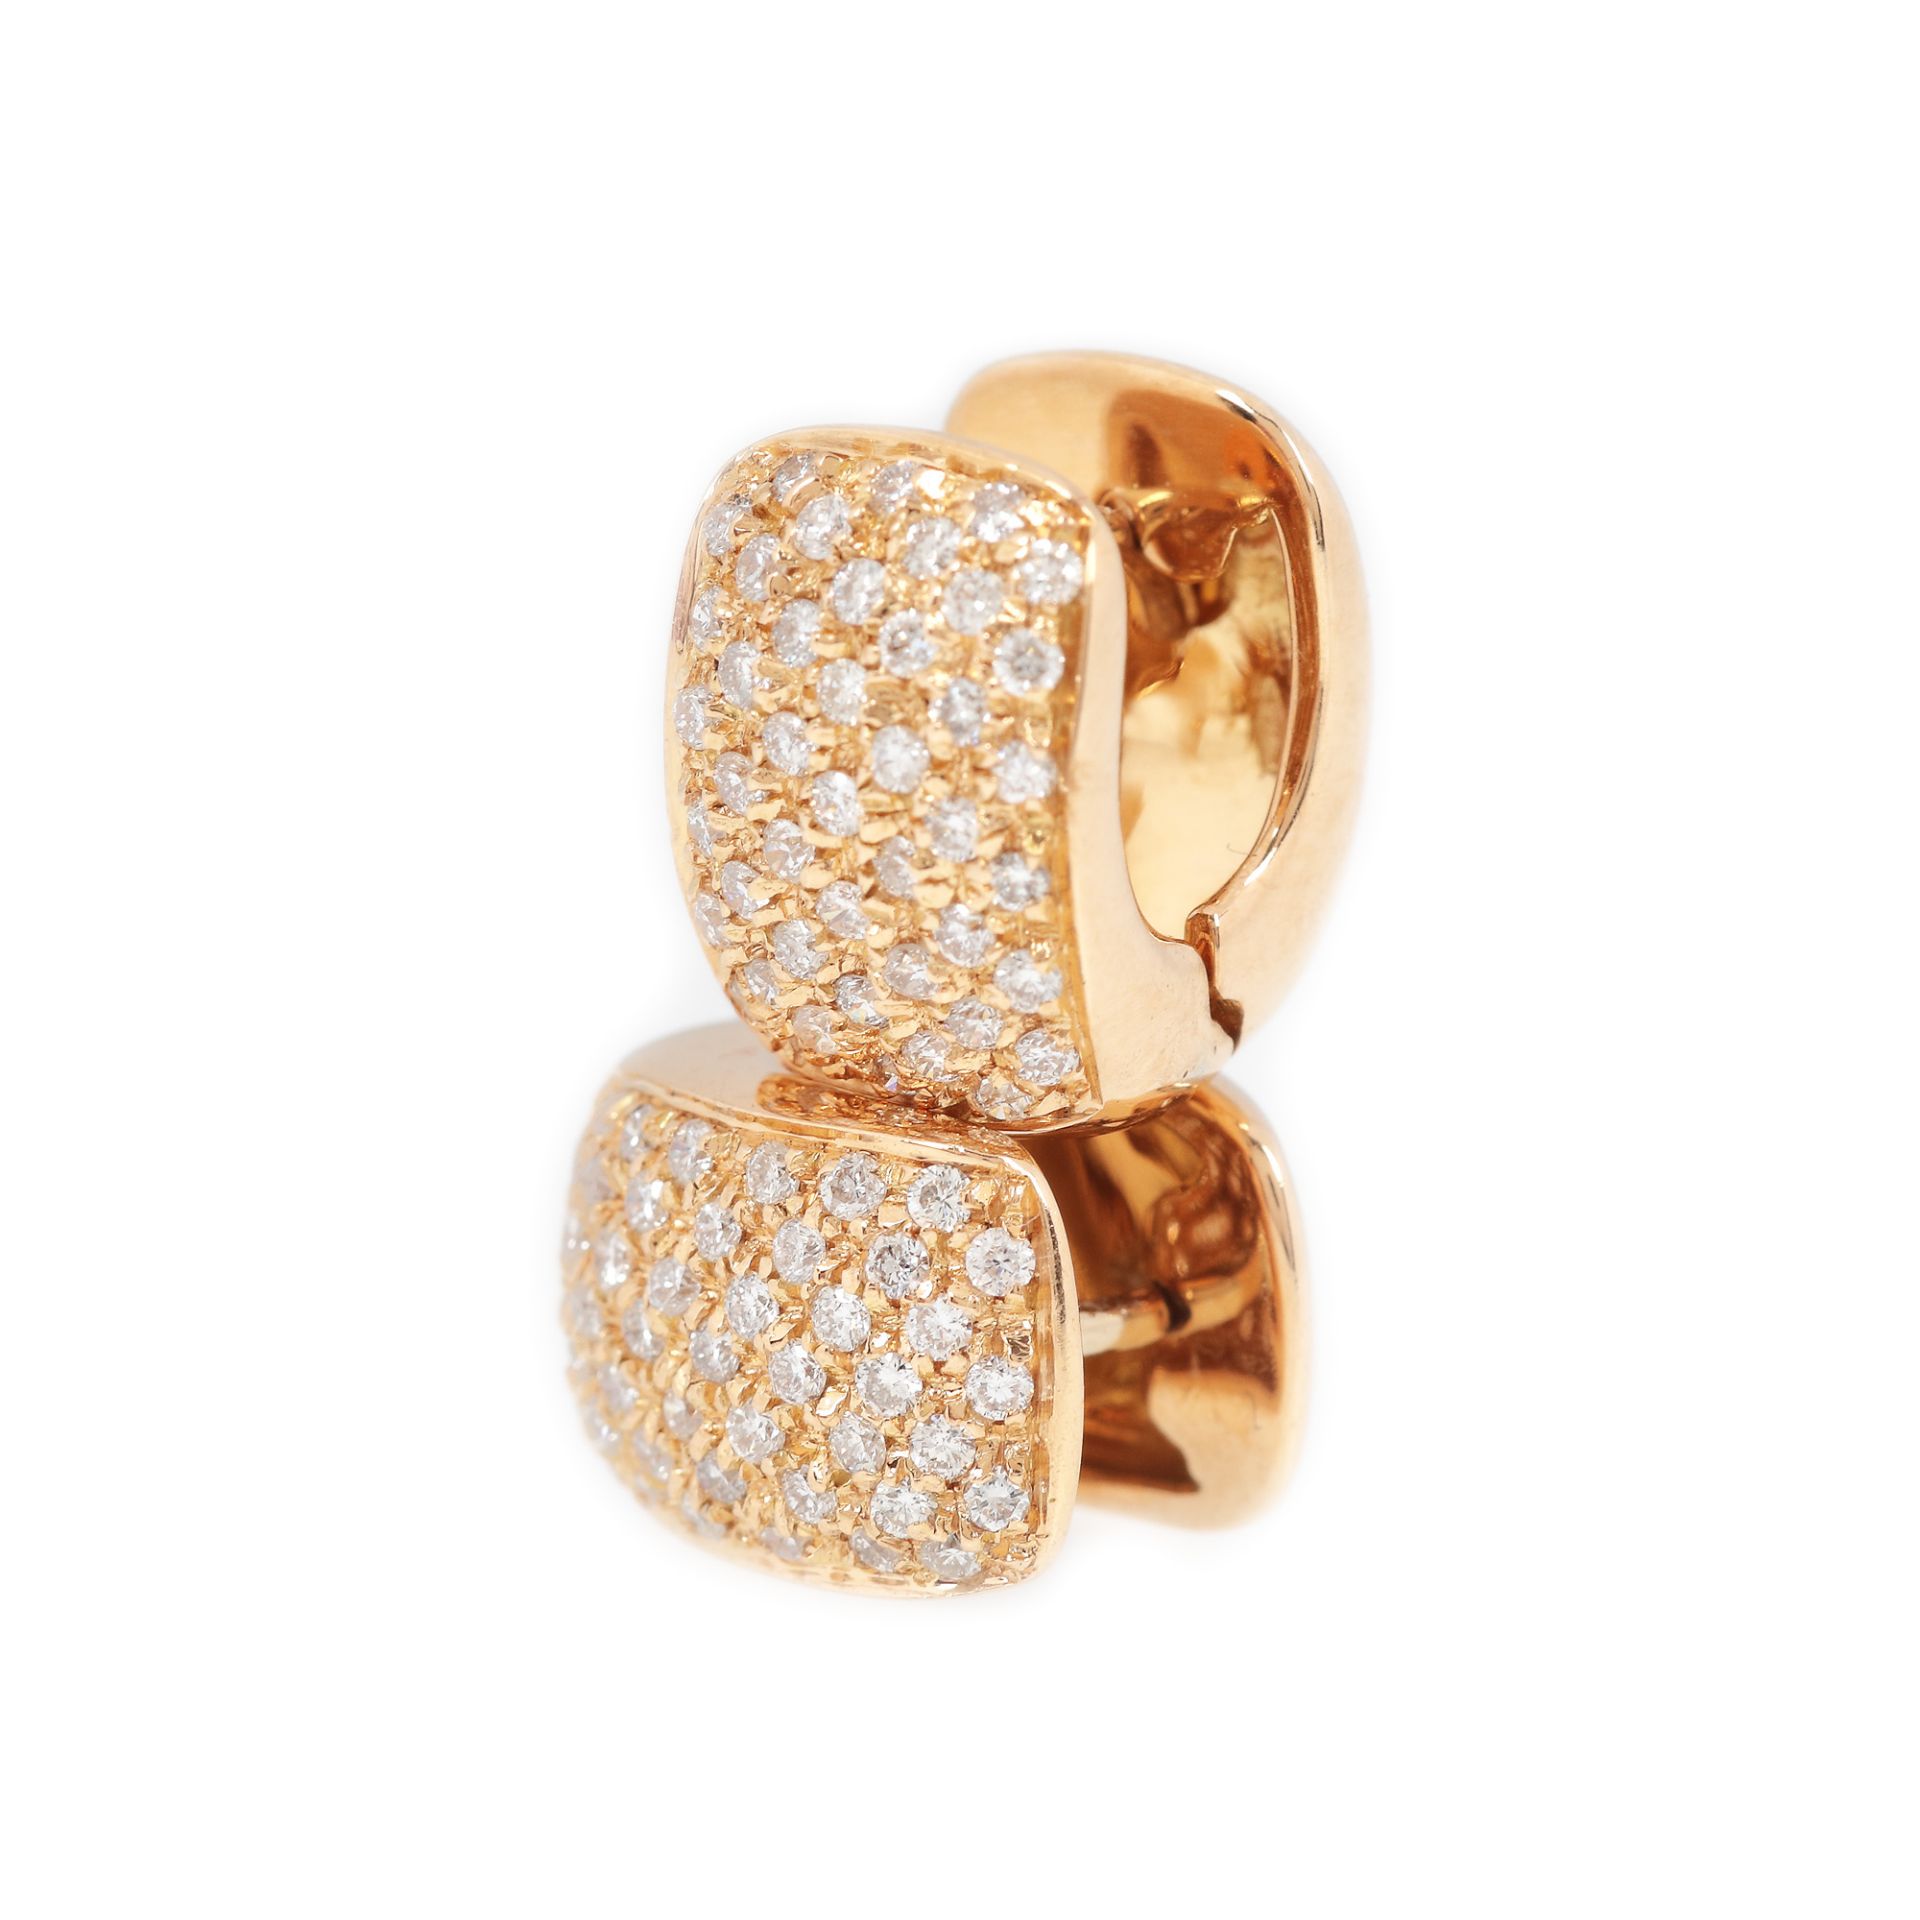 Gold earrings, paved with diamonds - Bild 2 aus 2